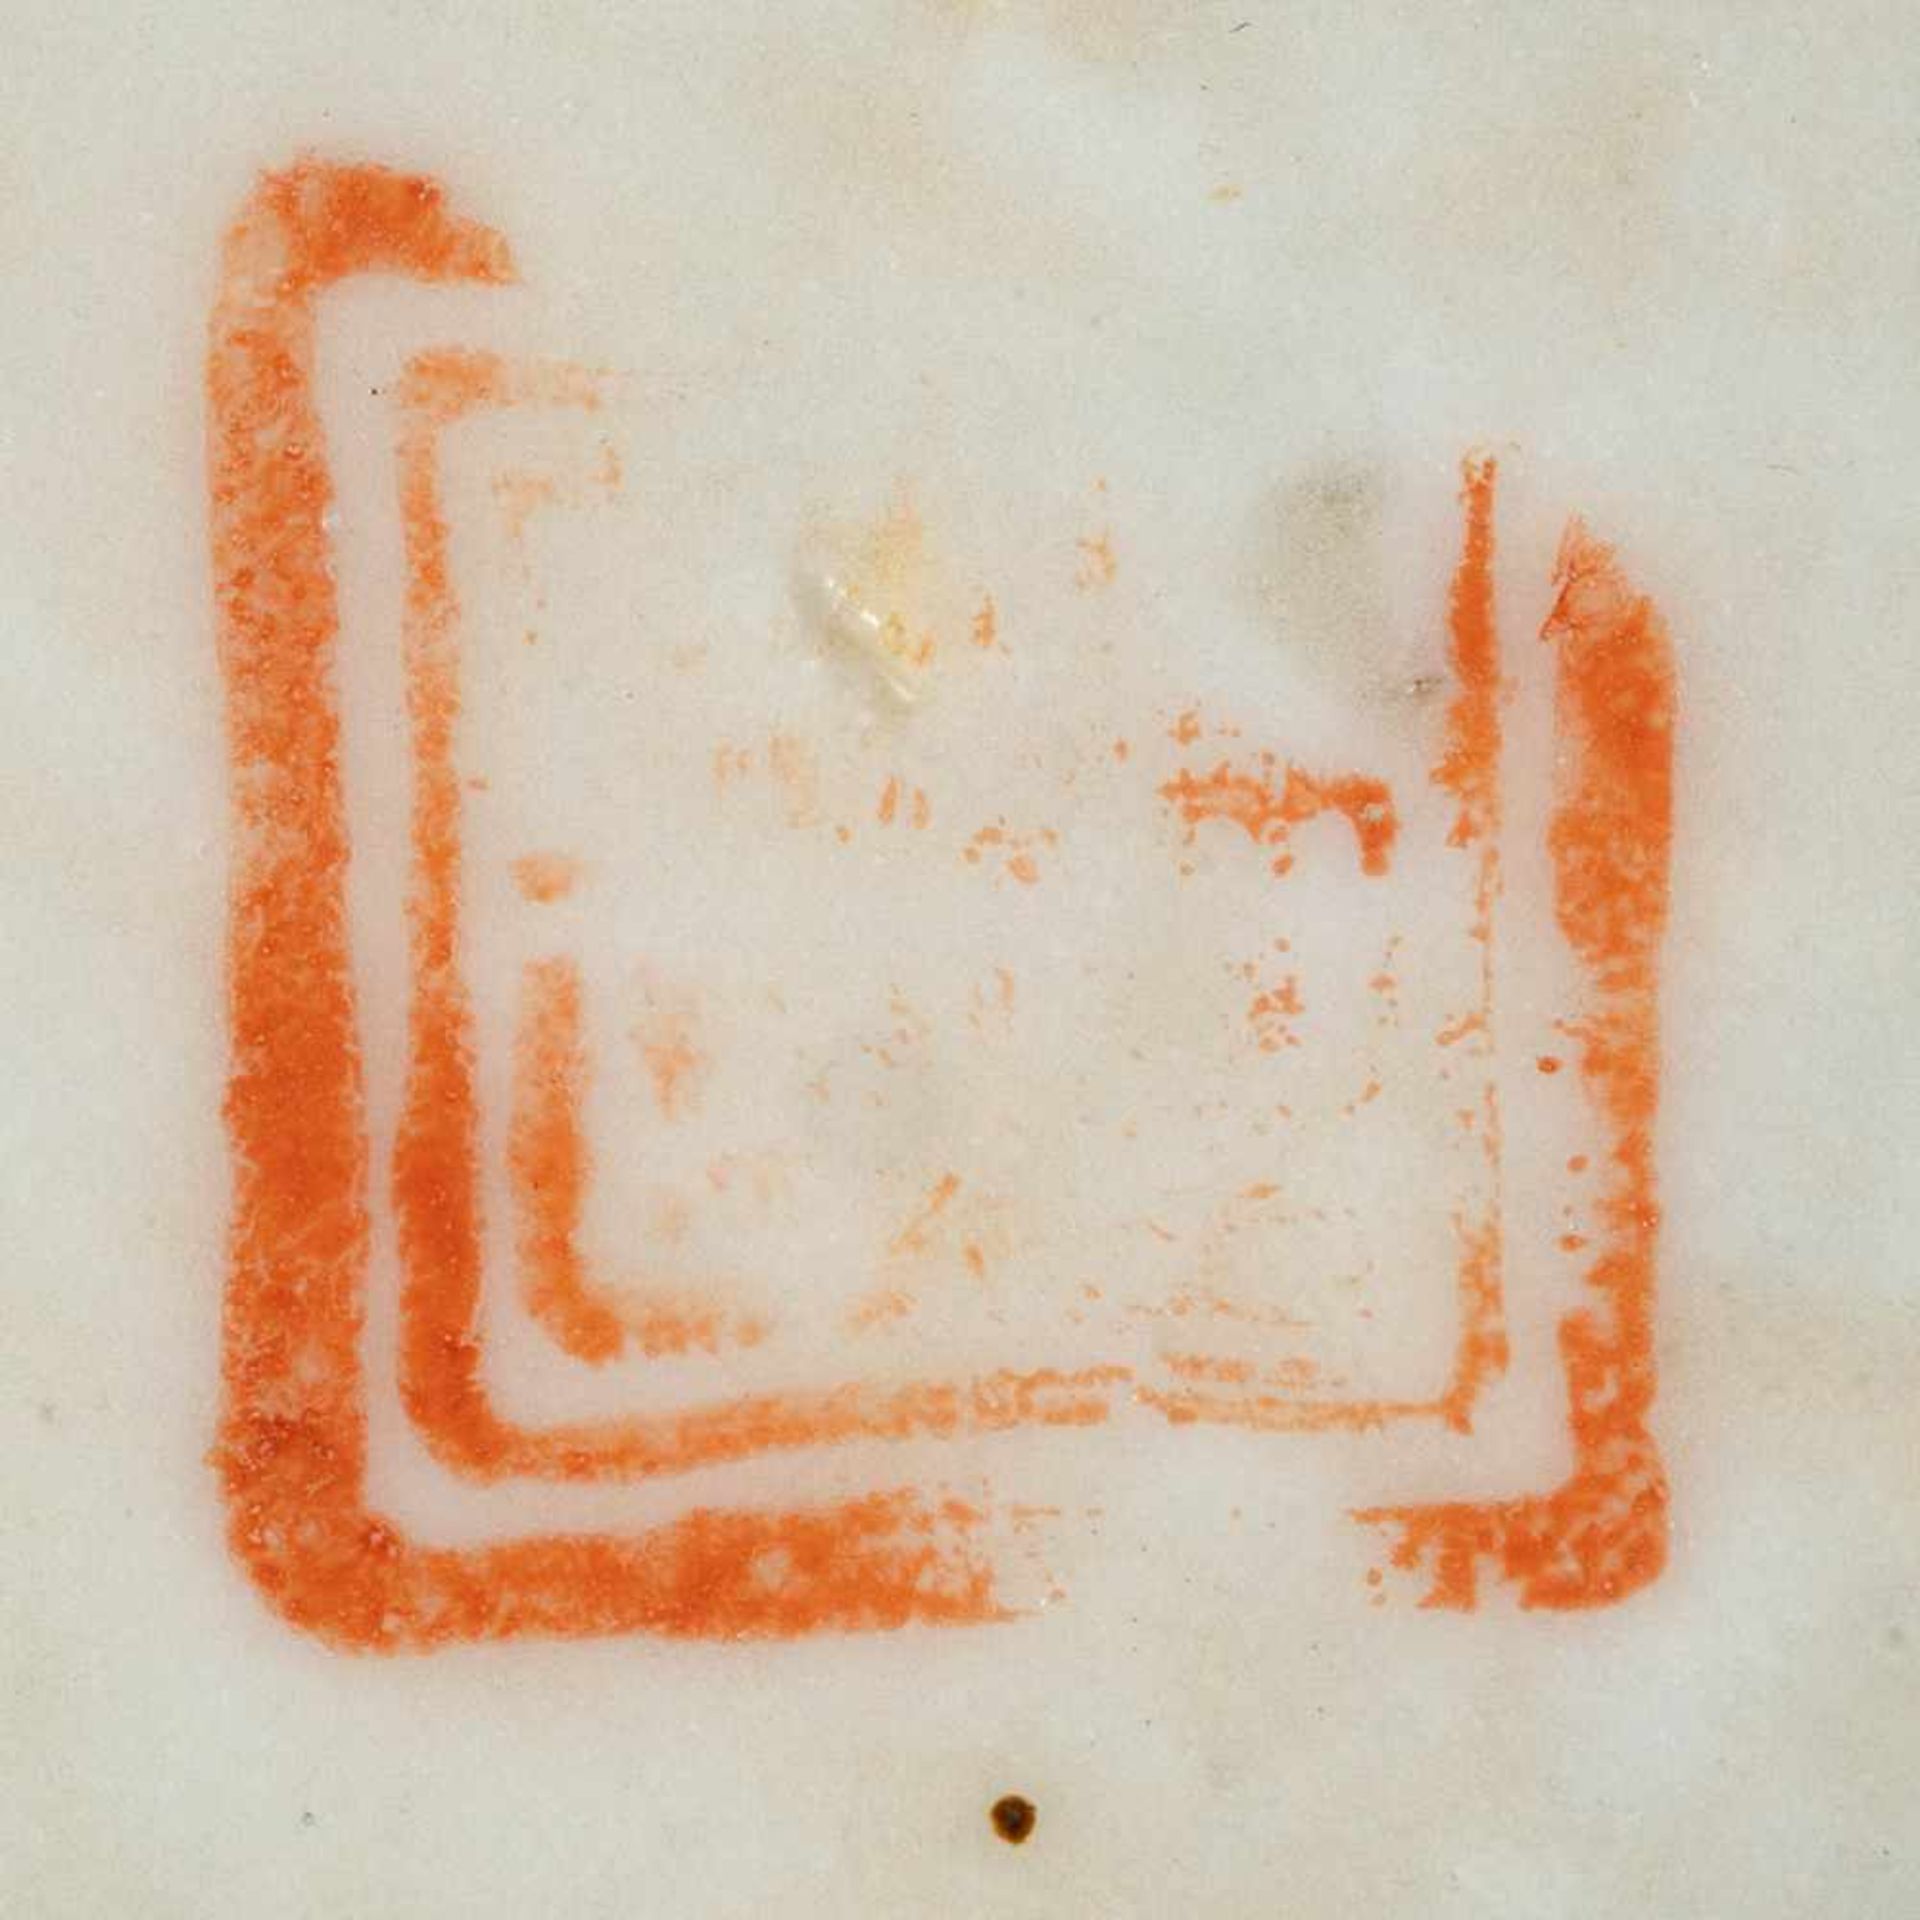 DREI SCHALEN China, um 1900 Porzellan, polychrome Aufglasurbemalung. D. 17,9 cm-18,4 cm. Im Boden - Image 3 of 4